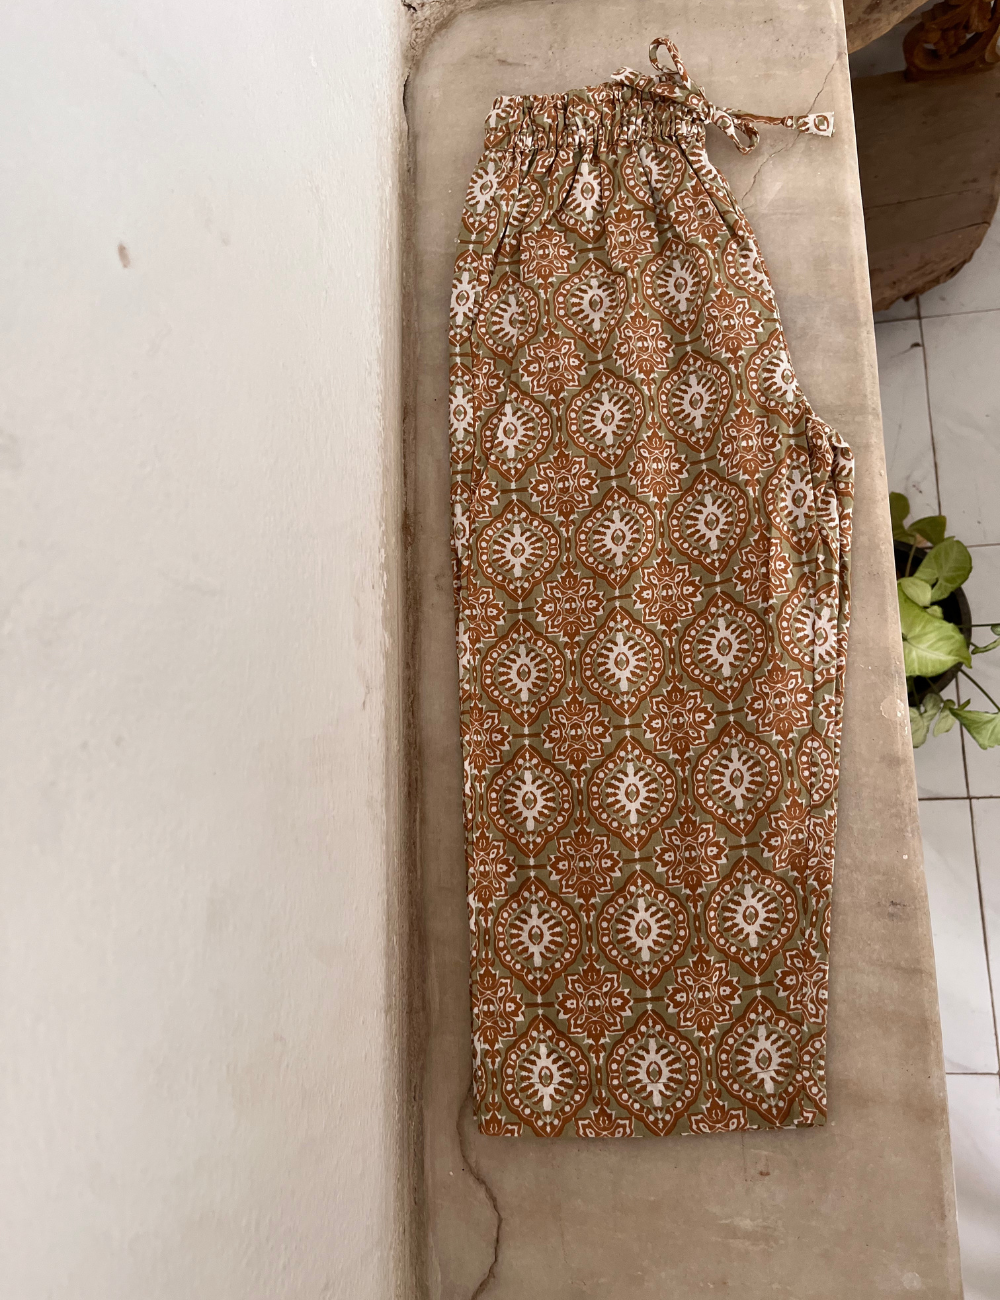 
                  
                    flat lay photo of indian block printed pants in retro funk print on concrete shelf
                  
                